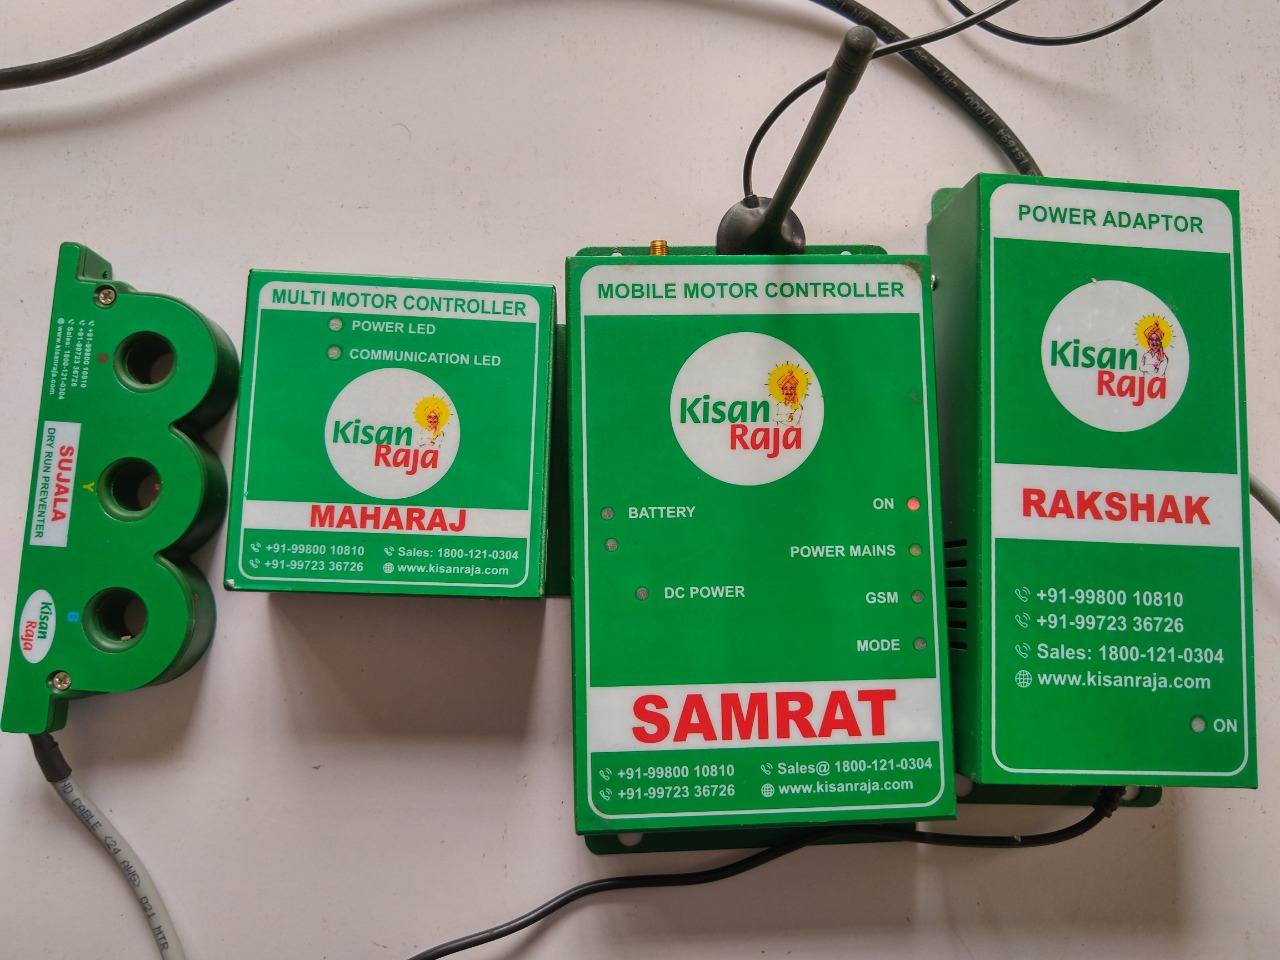 KisanRaja: A Smart Irrigation Device Helps Over 34,200 Farmers!